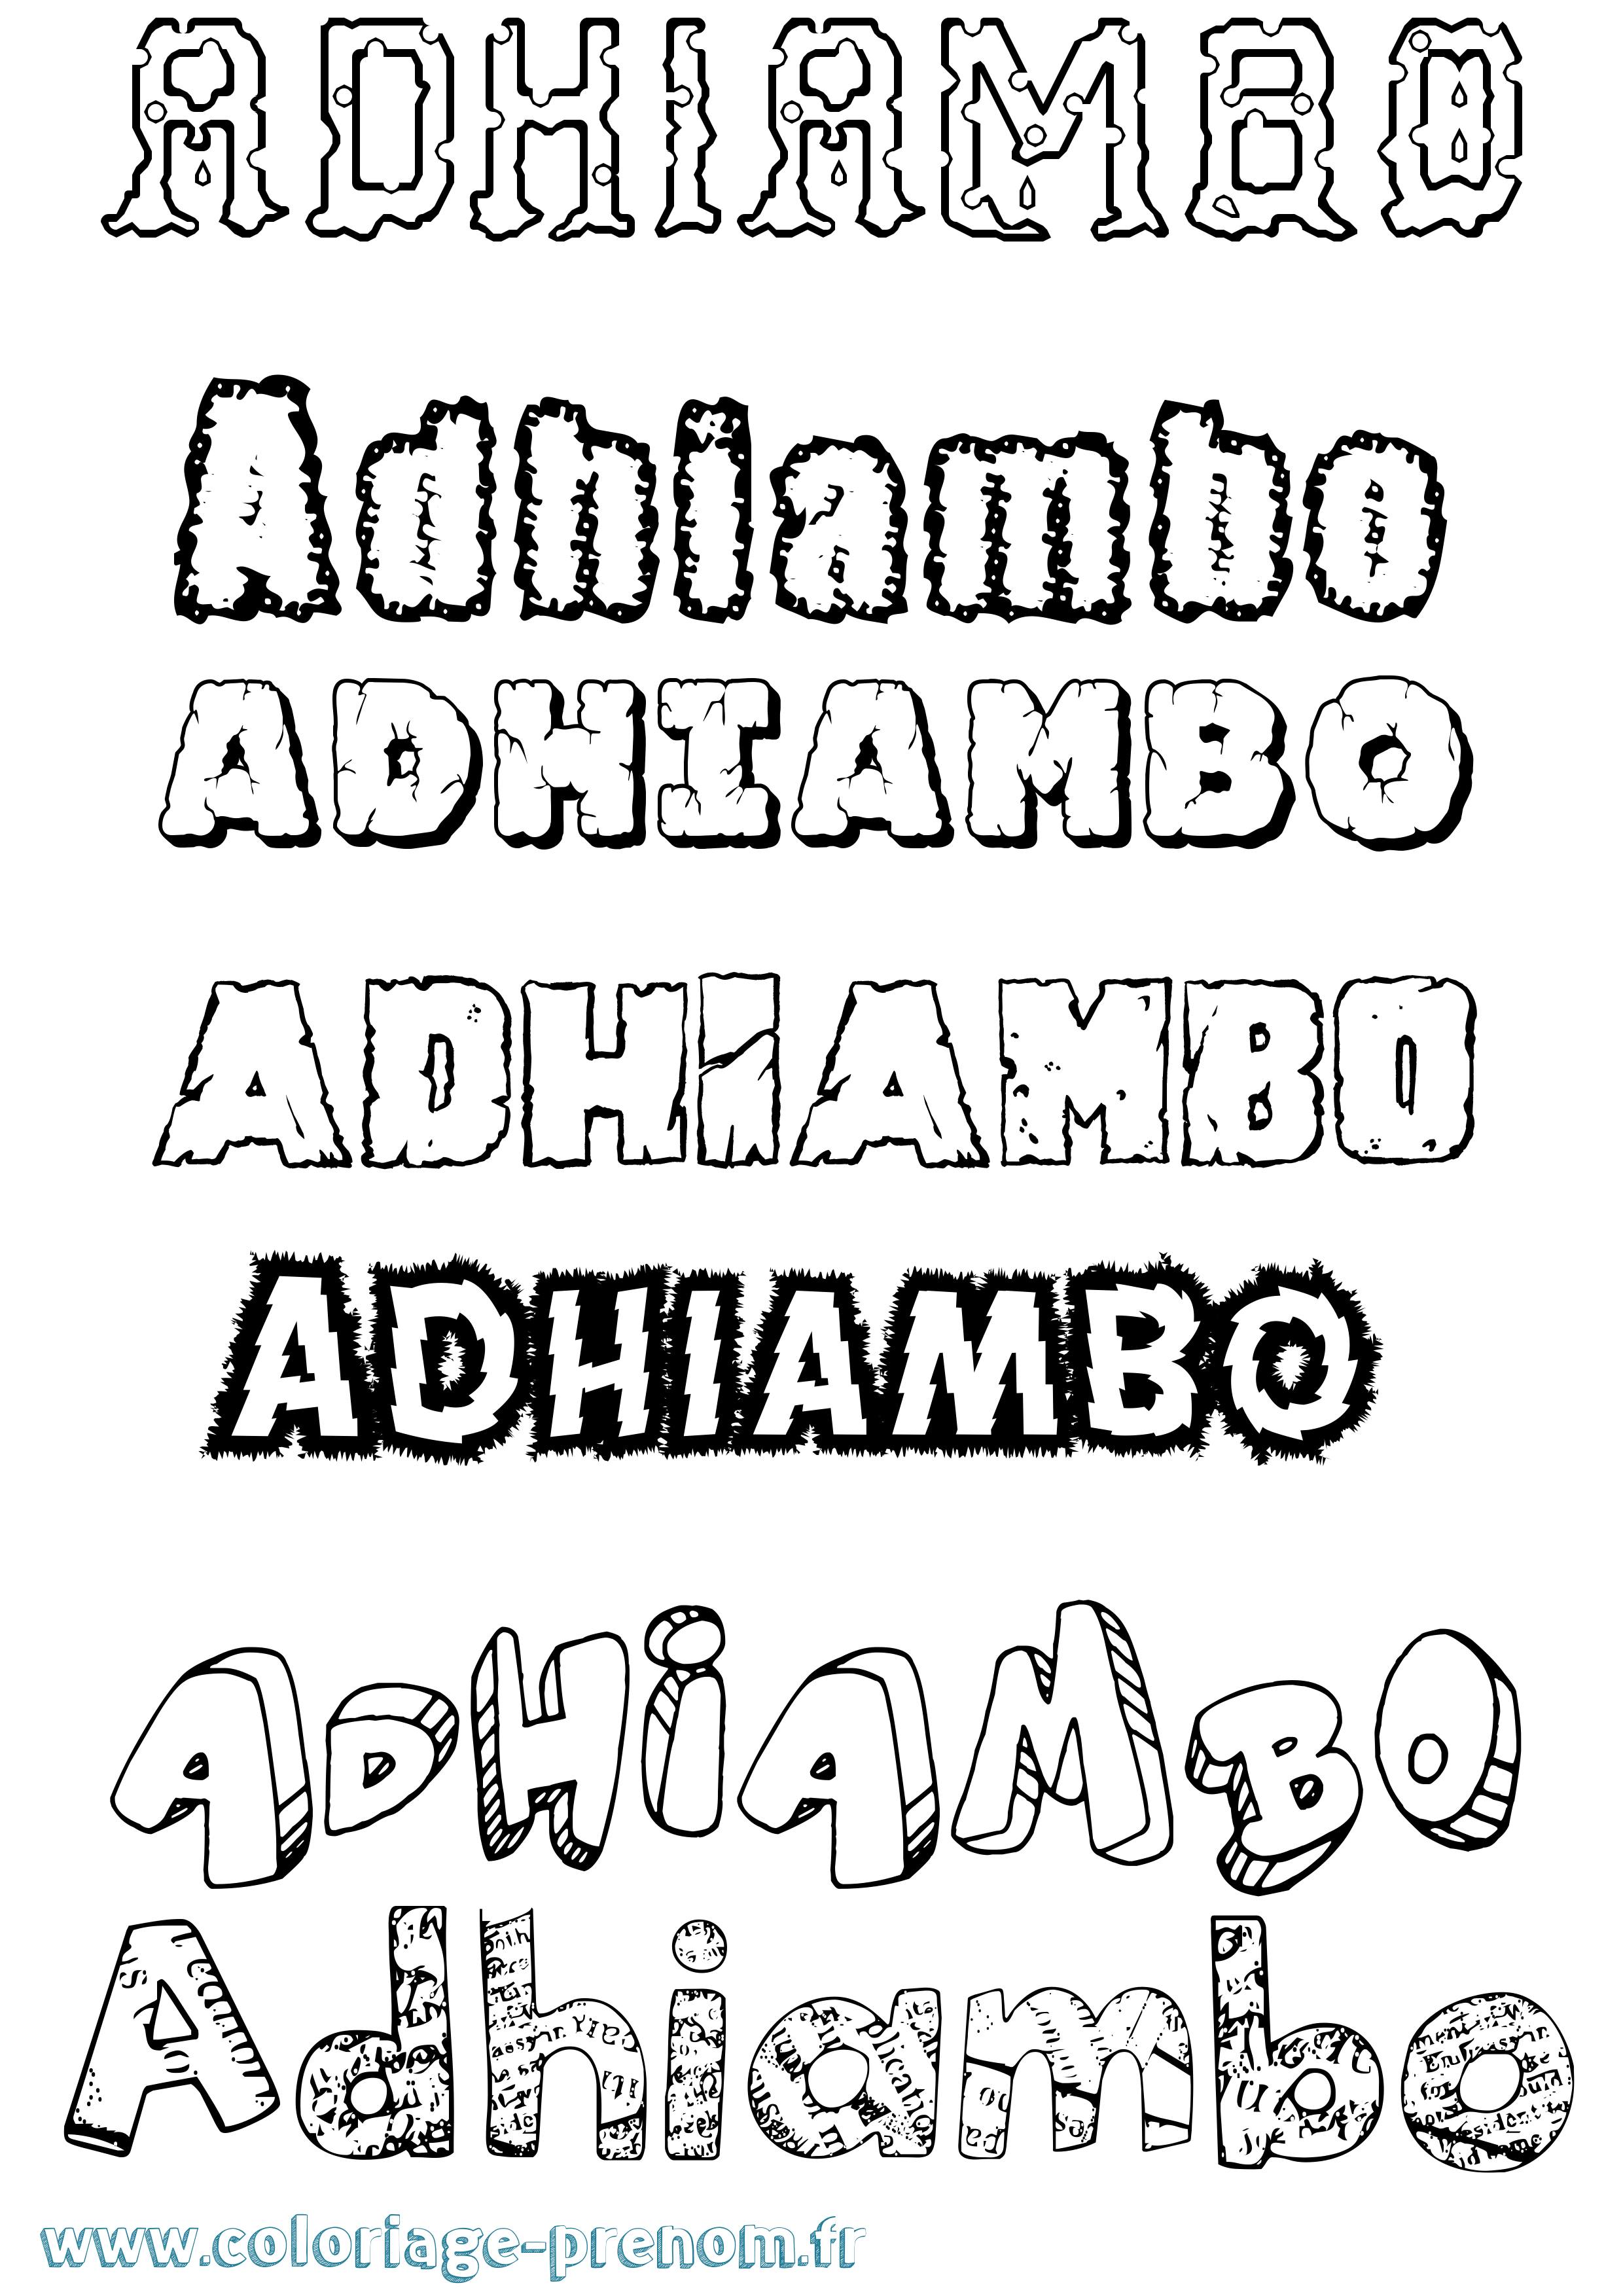 Coloriage prénom Adhiambo Destructuré